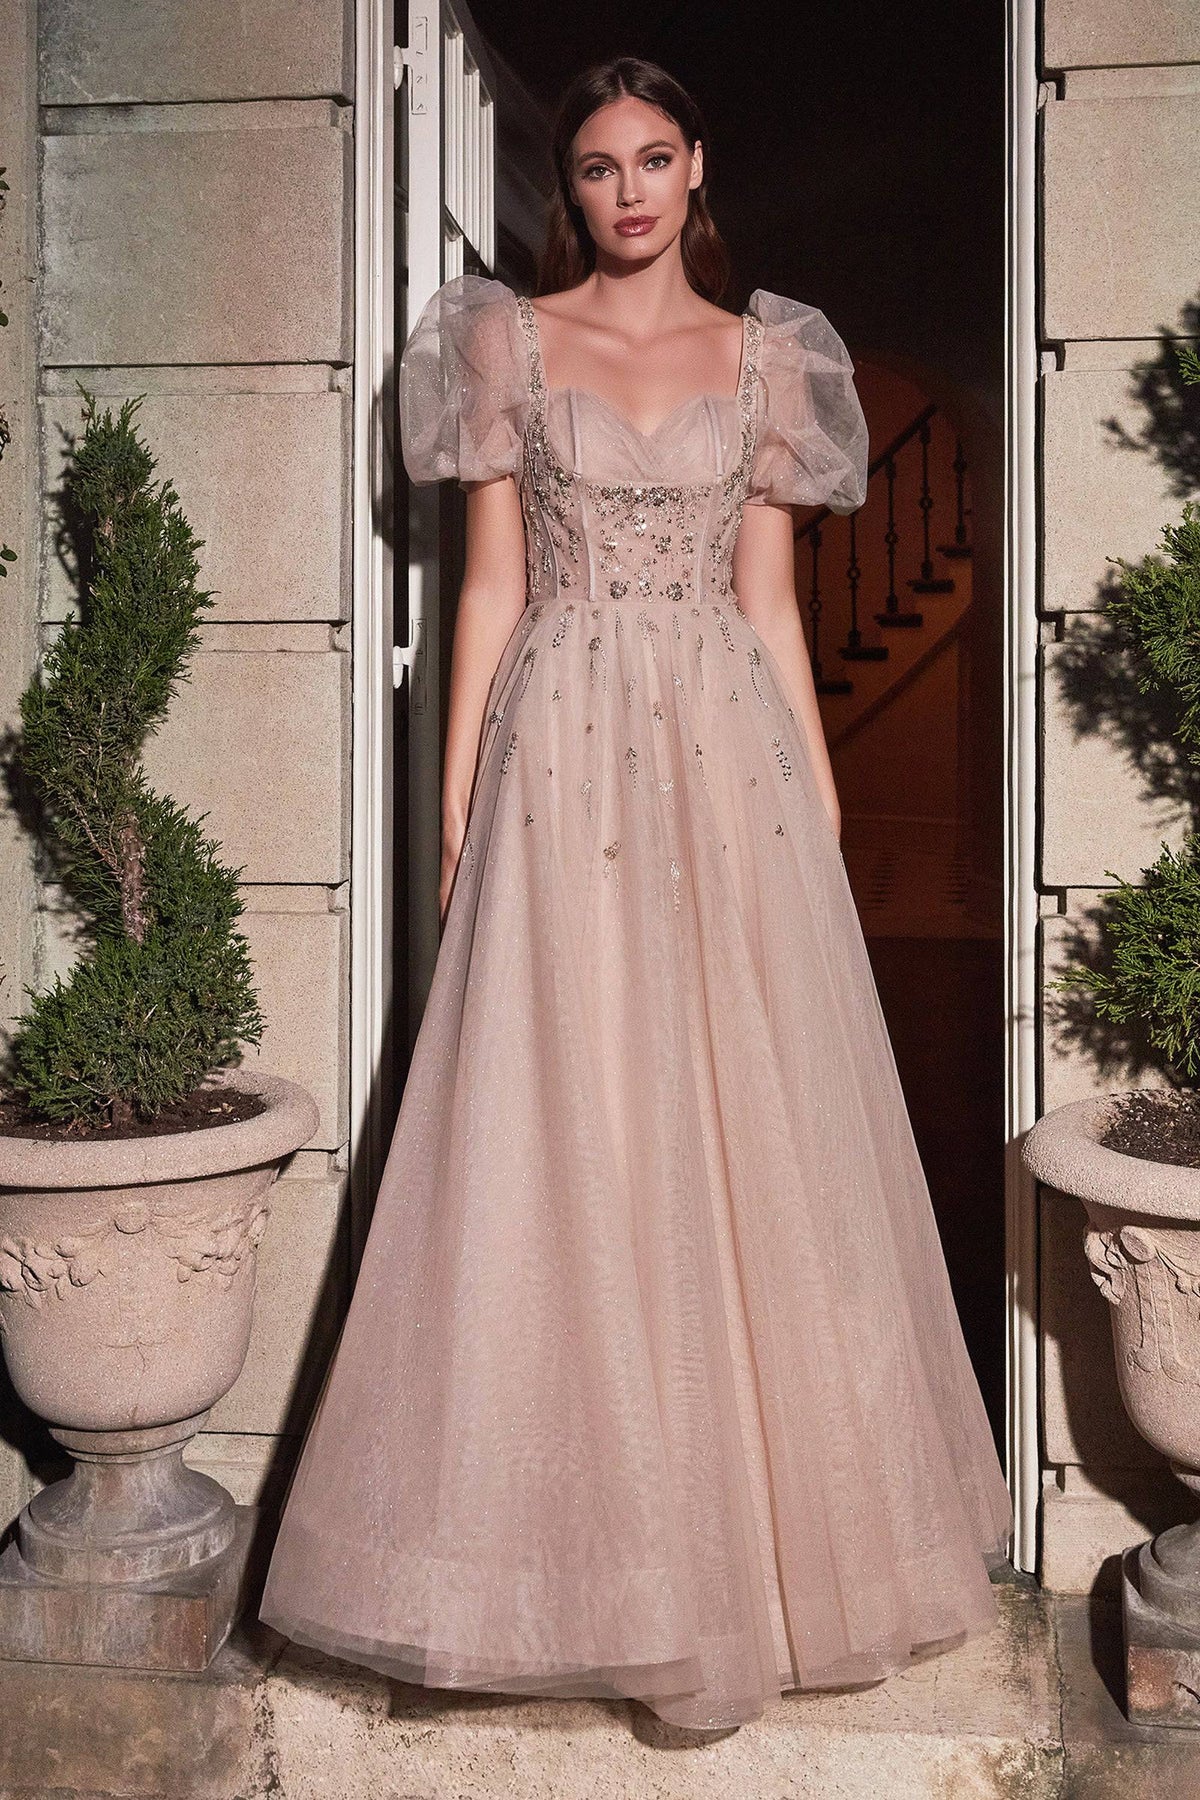 Elegant Princess-Like Ballgown with Puffy Sleeves and Corset-Like Waistline #CDB711 - NORMA REED